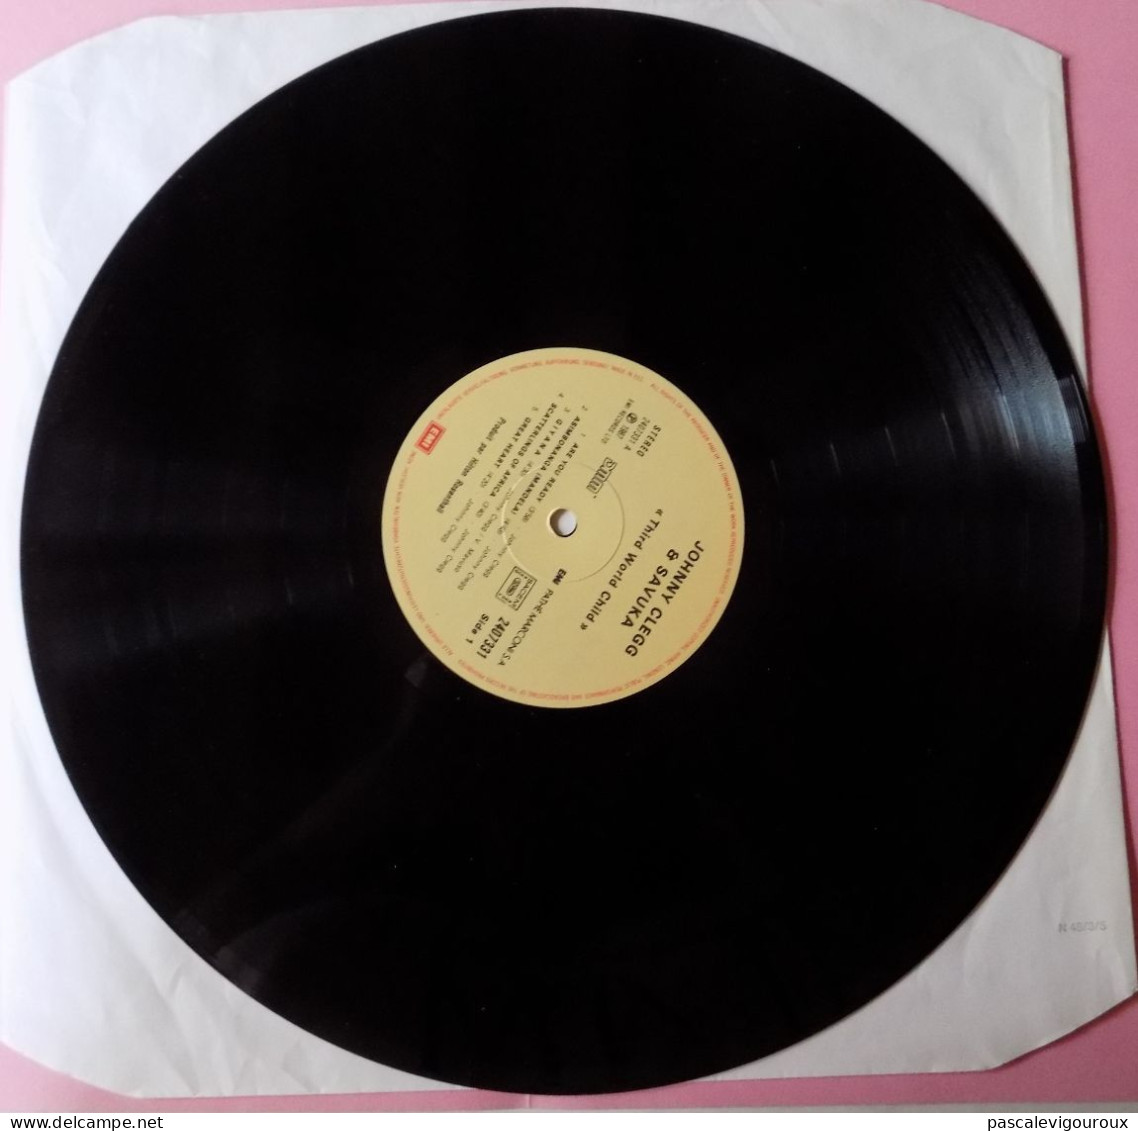 Johnny Clegg & Savuka - Third World Child - LP - 33T - France 1987 - Disco, Pop